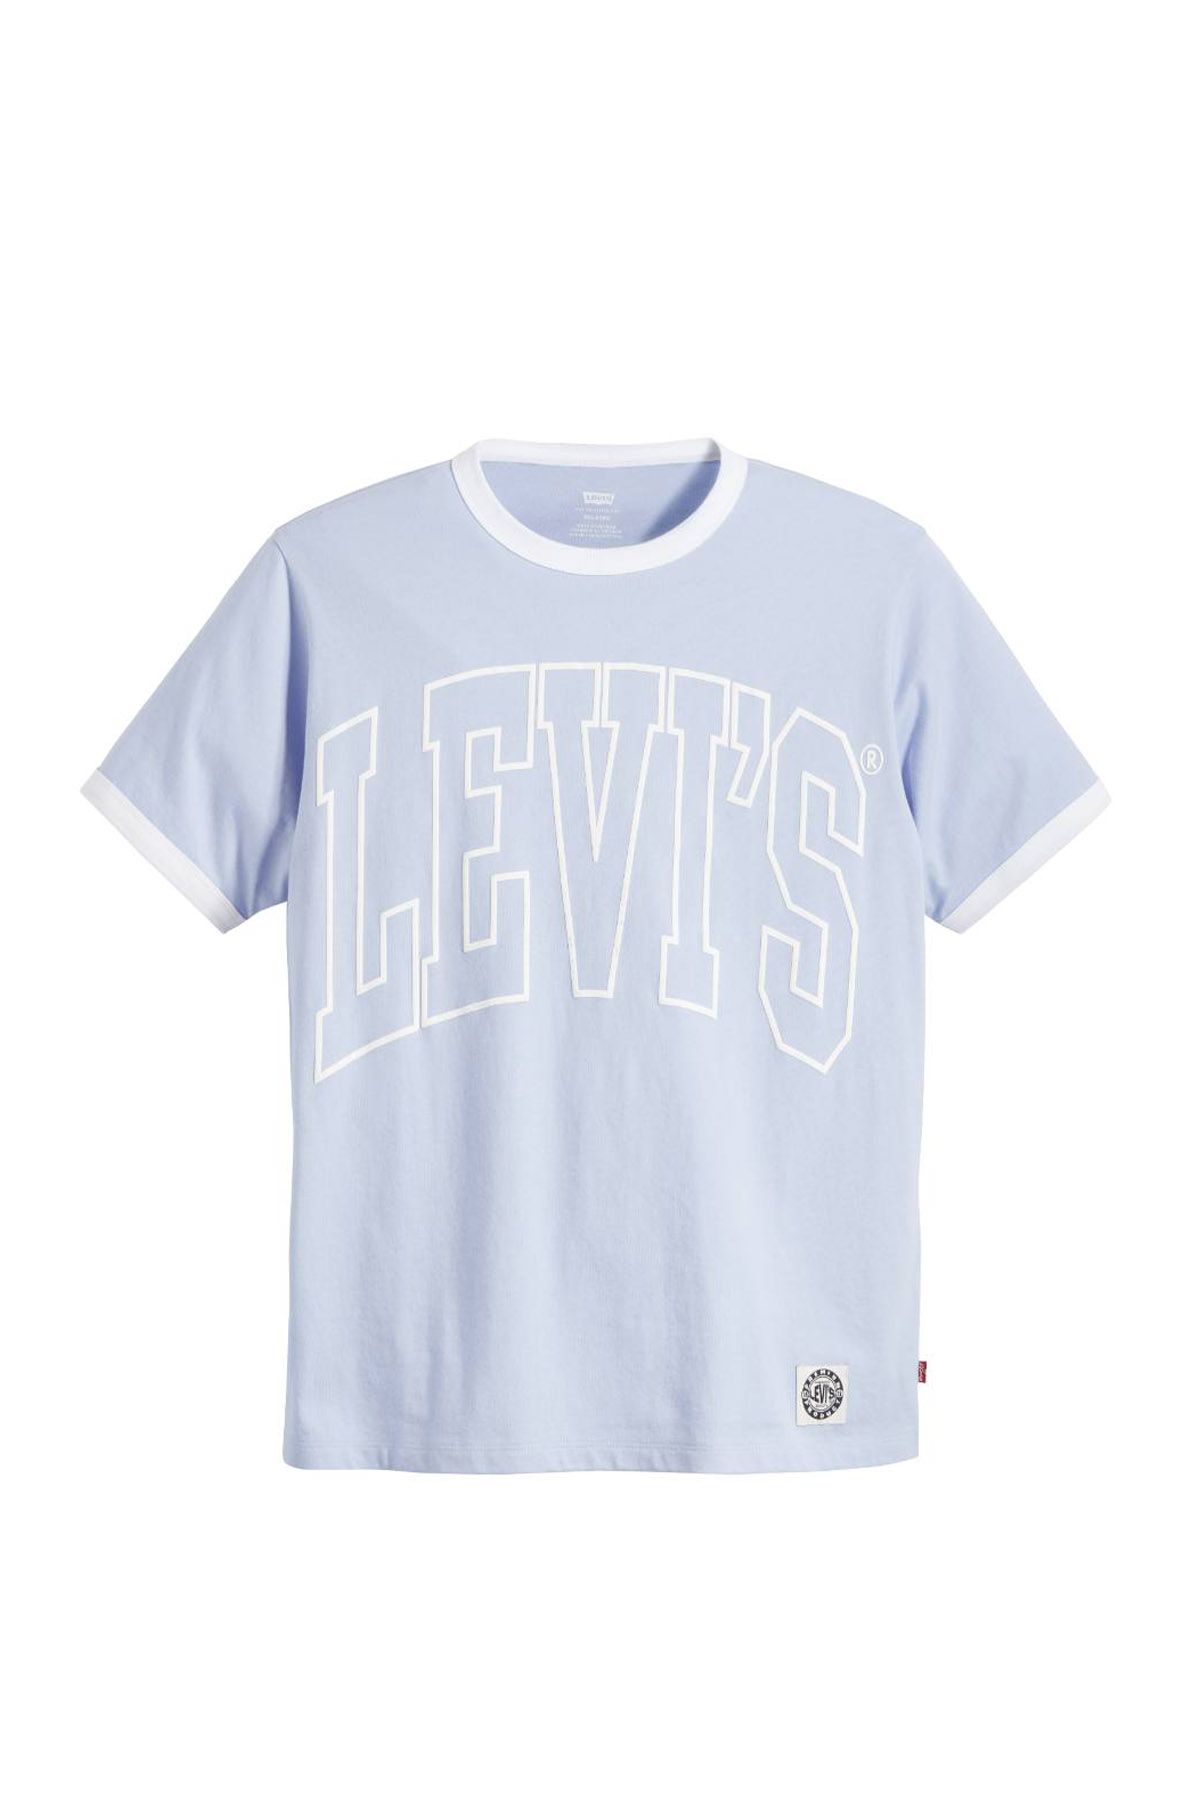 Levi's Women's Graphic Ringer T-Shirt